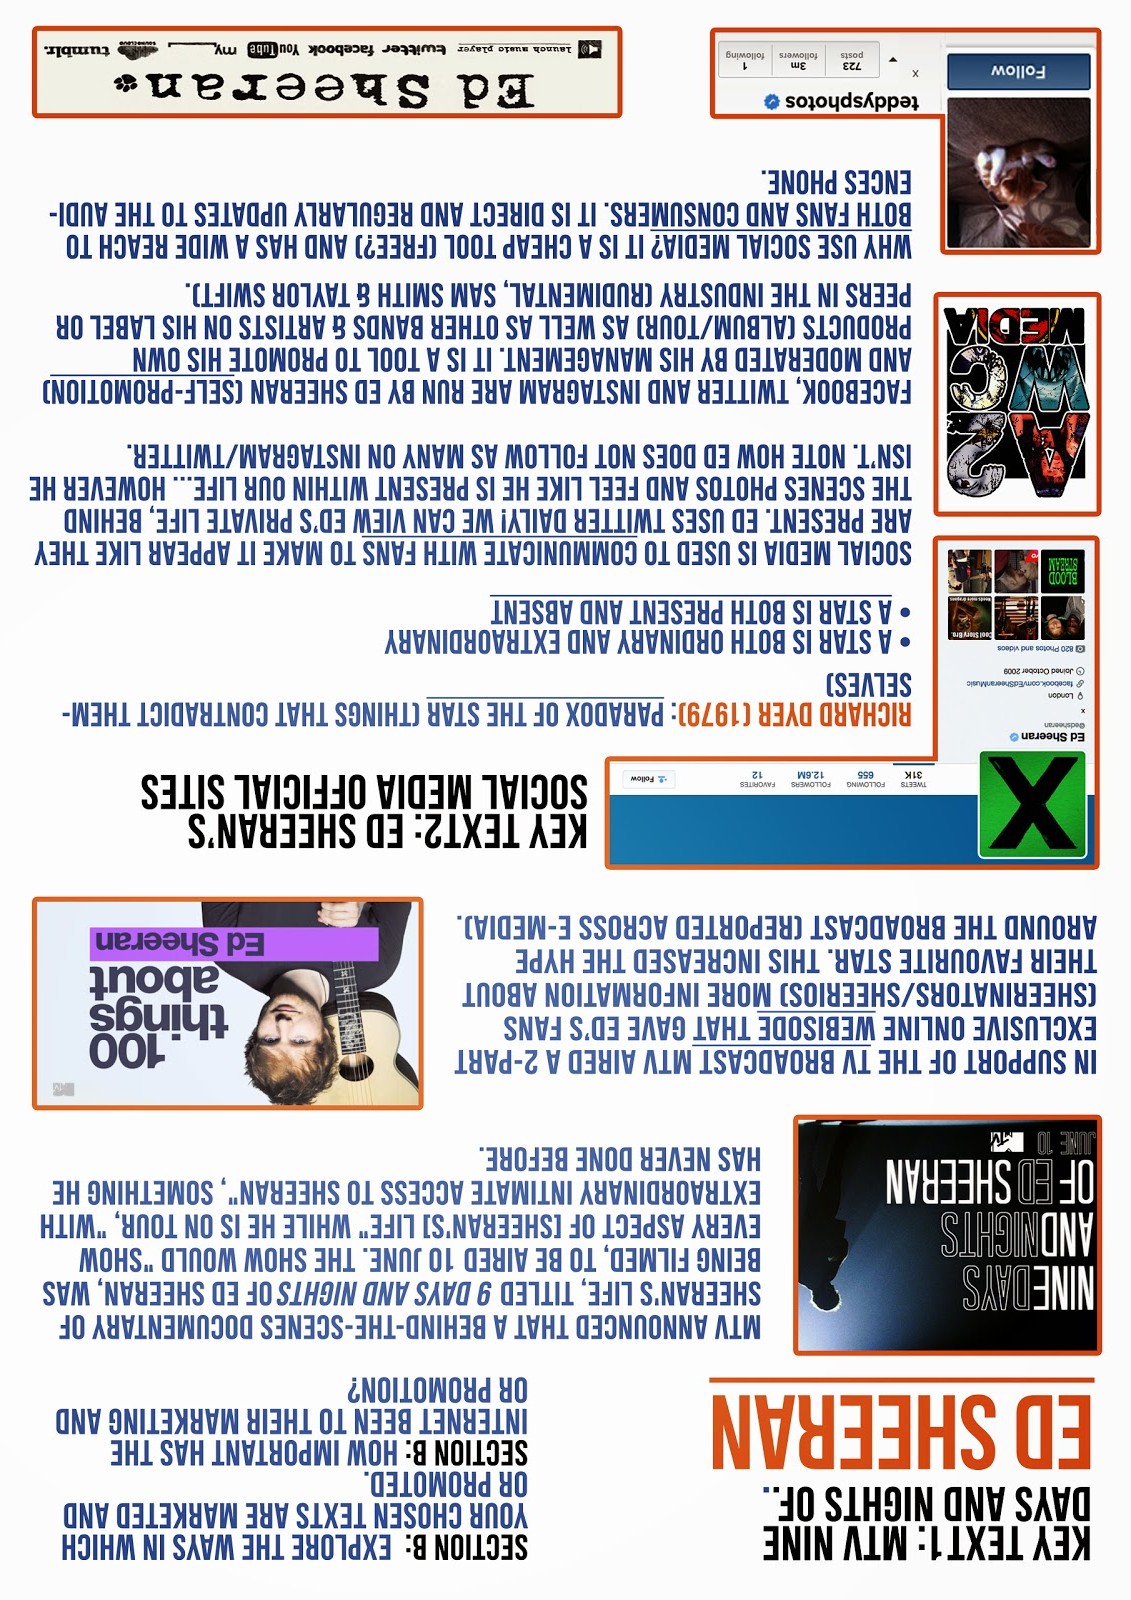 Ed Sheeran: Infographic